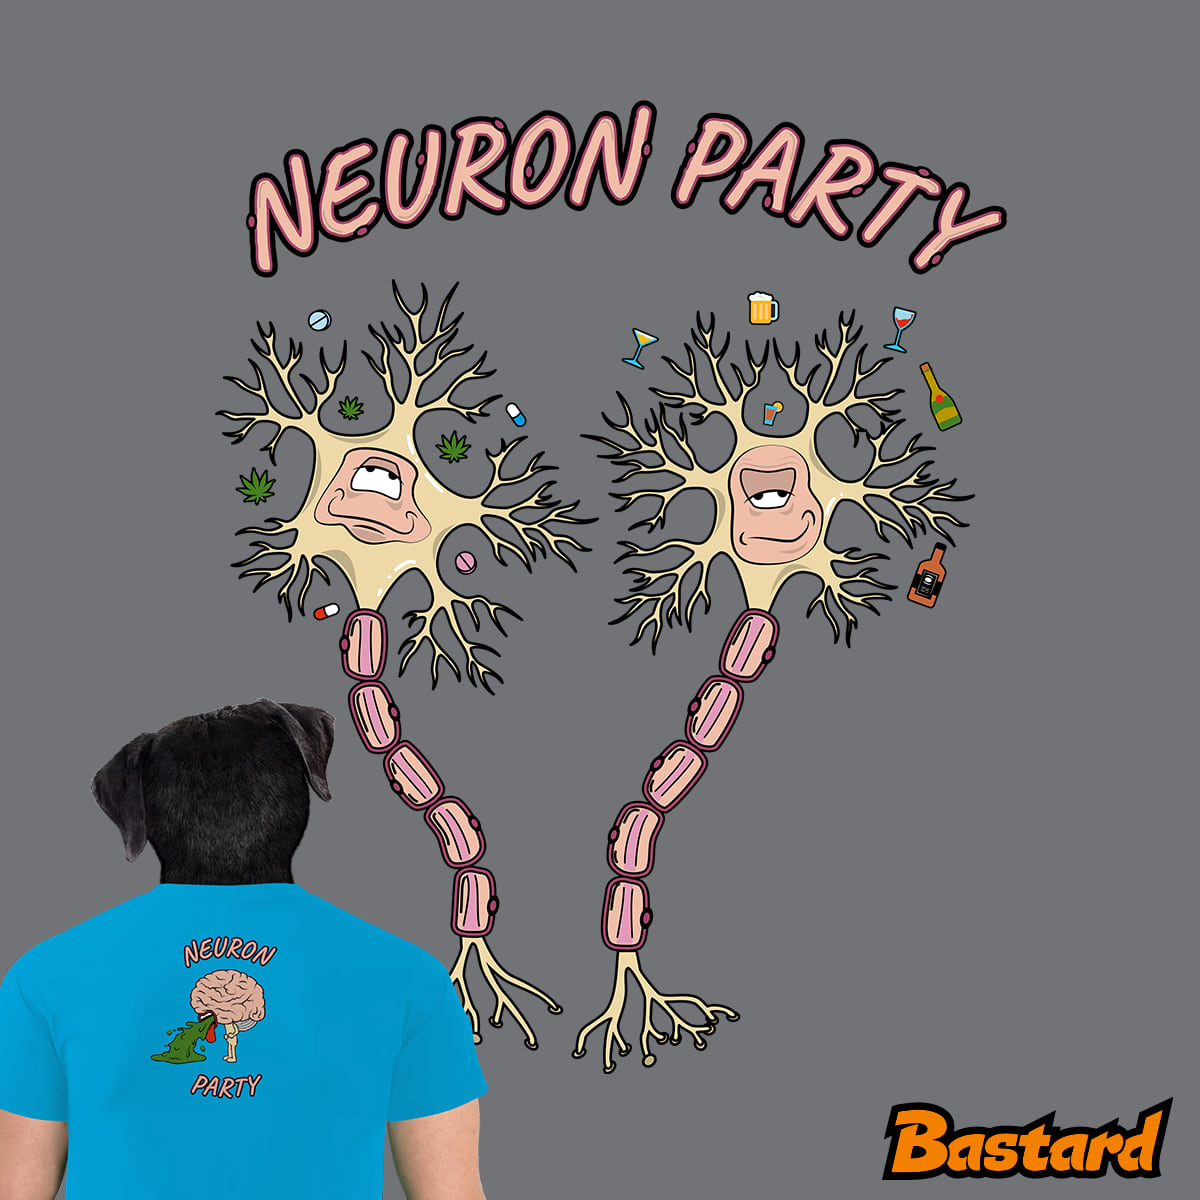 Neuron party